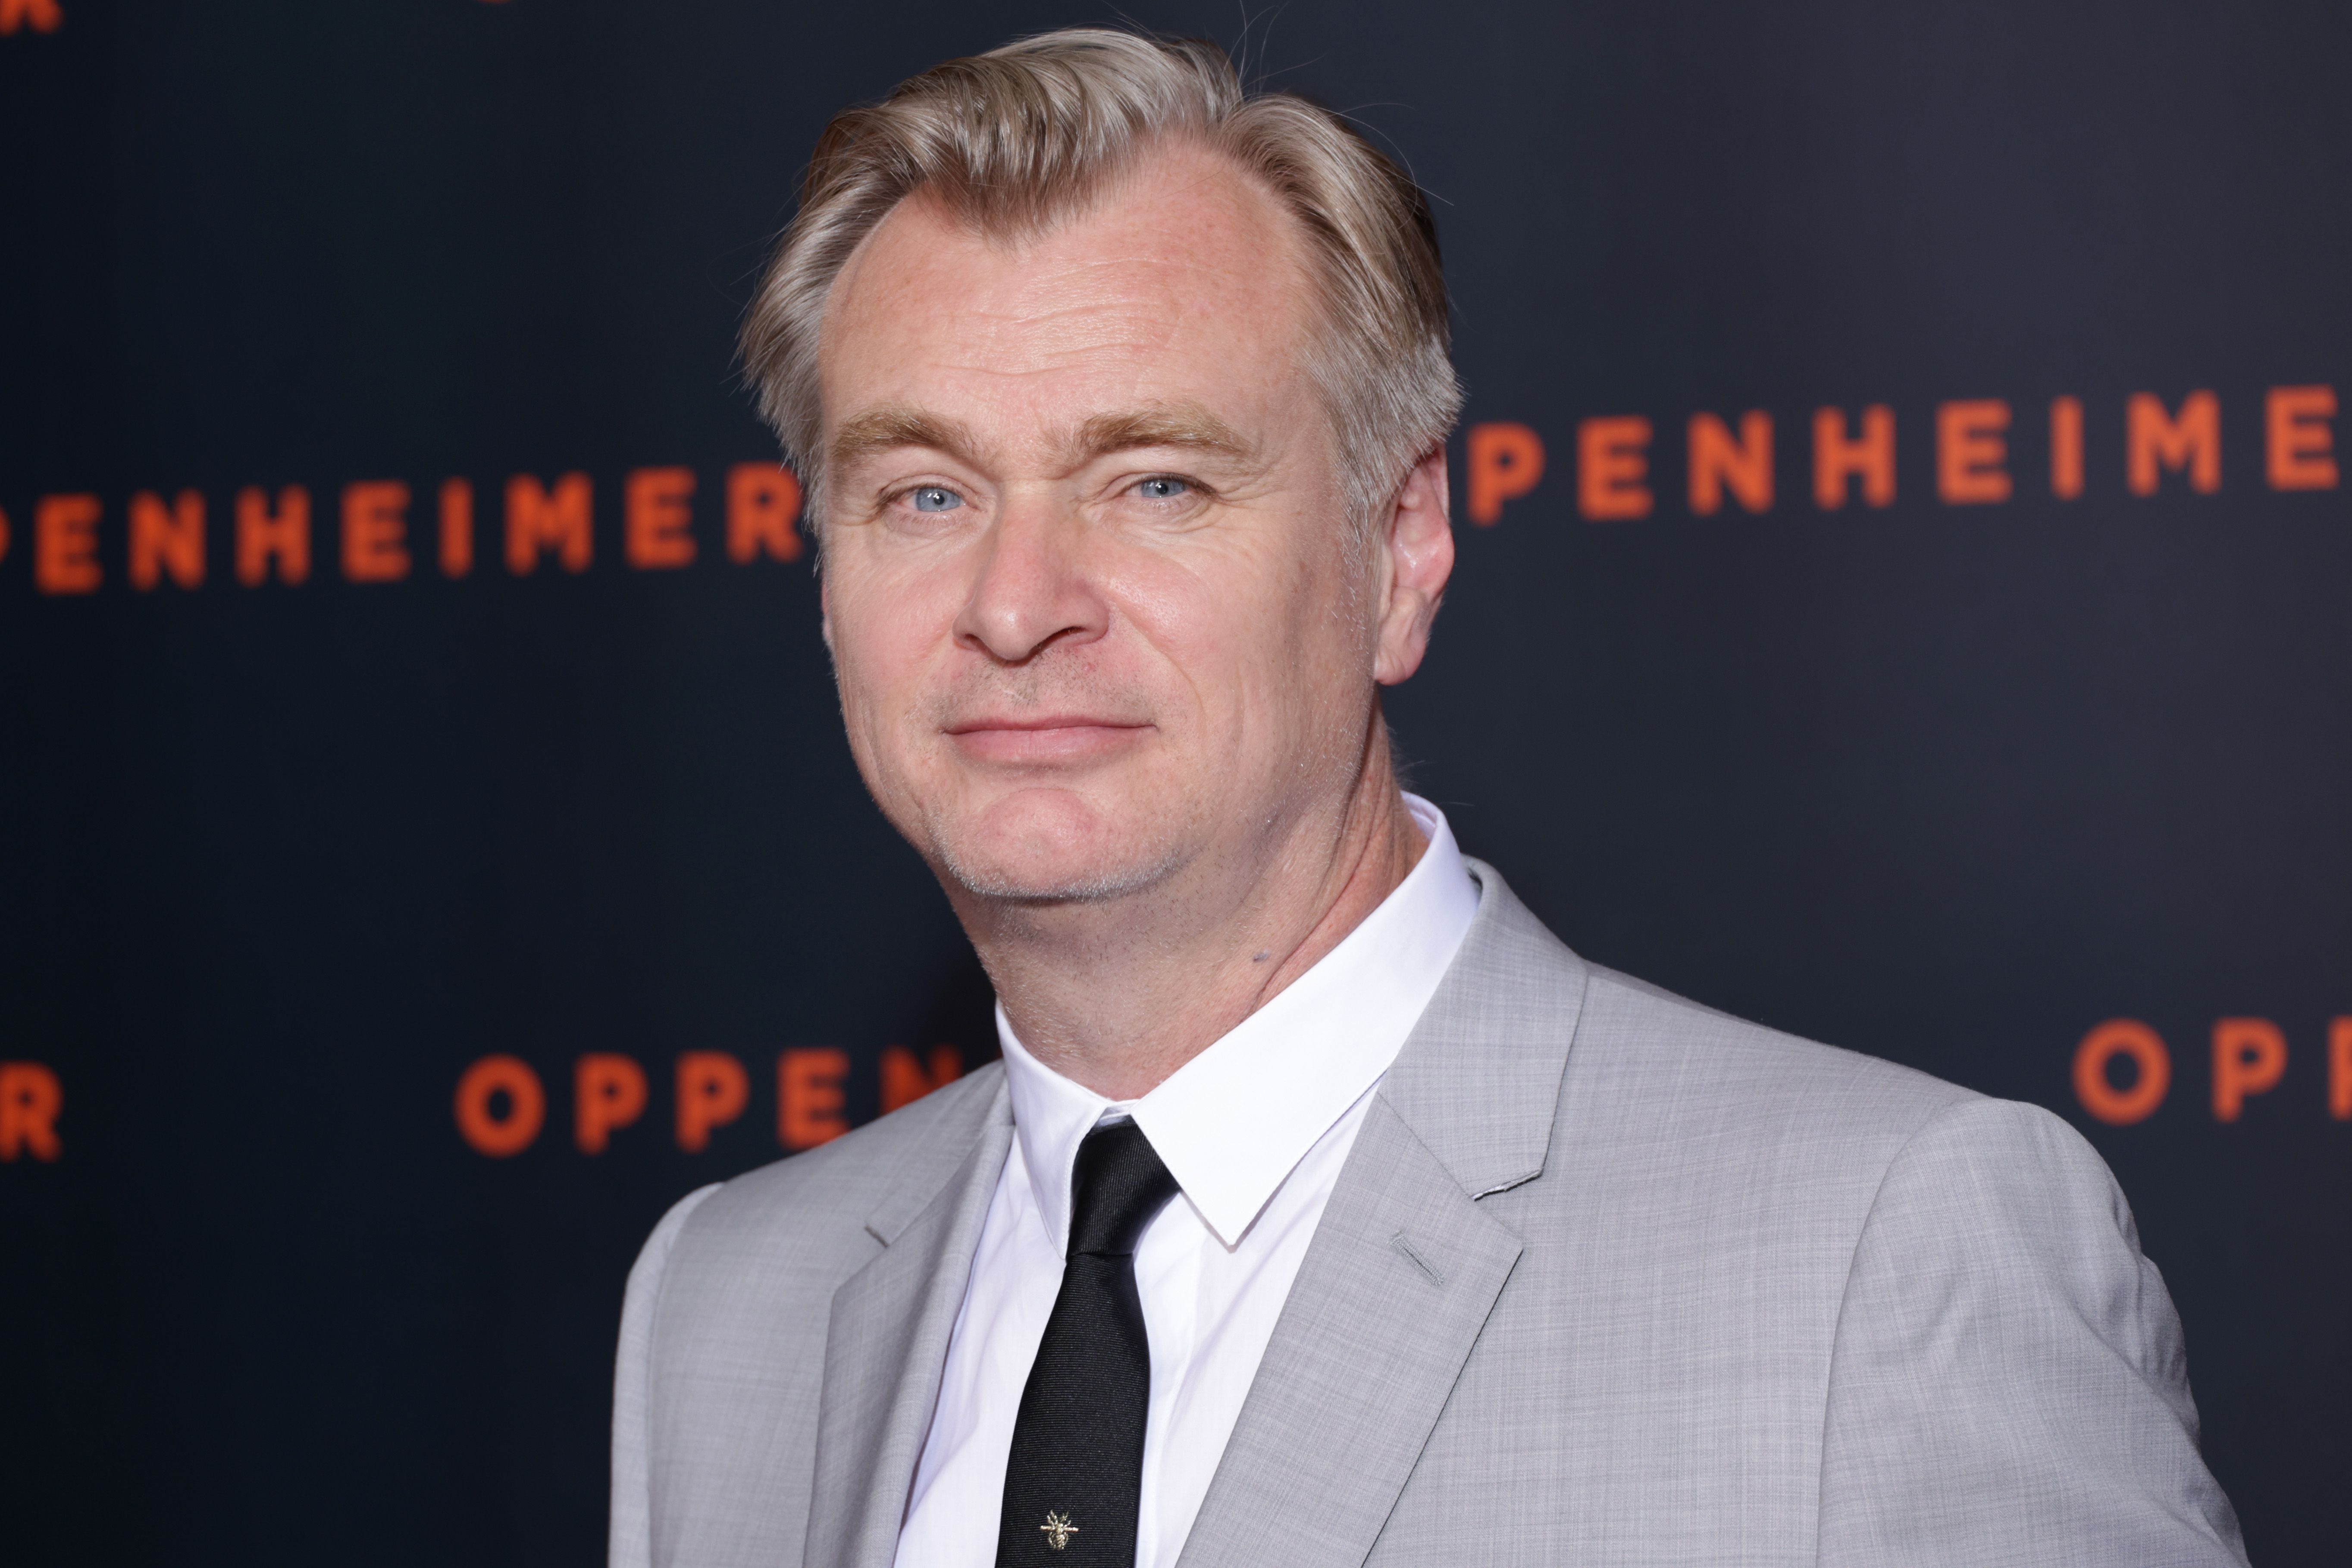 Christopher Nolan: Biography, Movie Director, Filmmaker